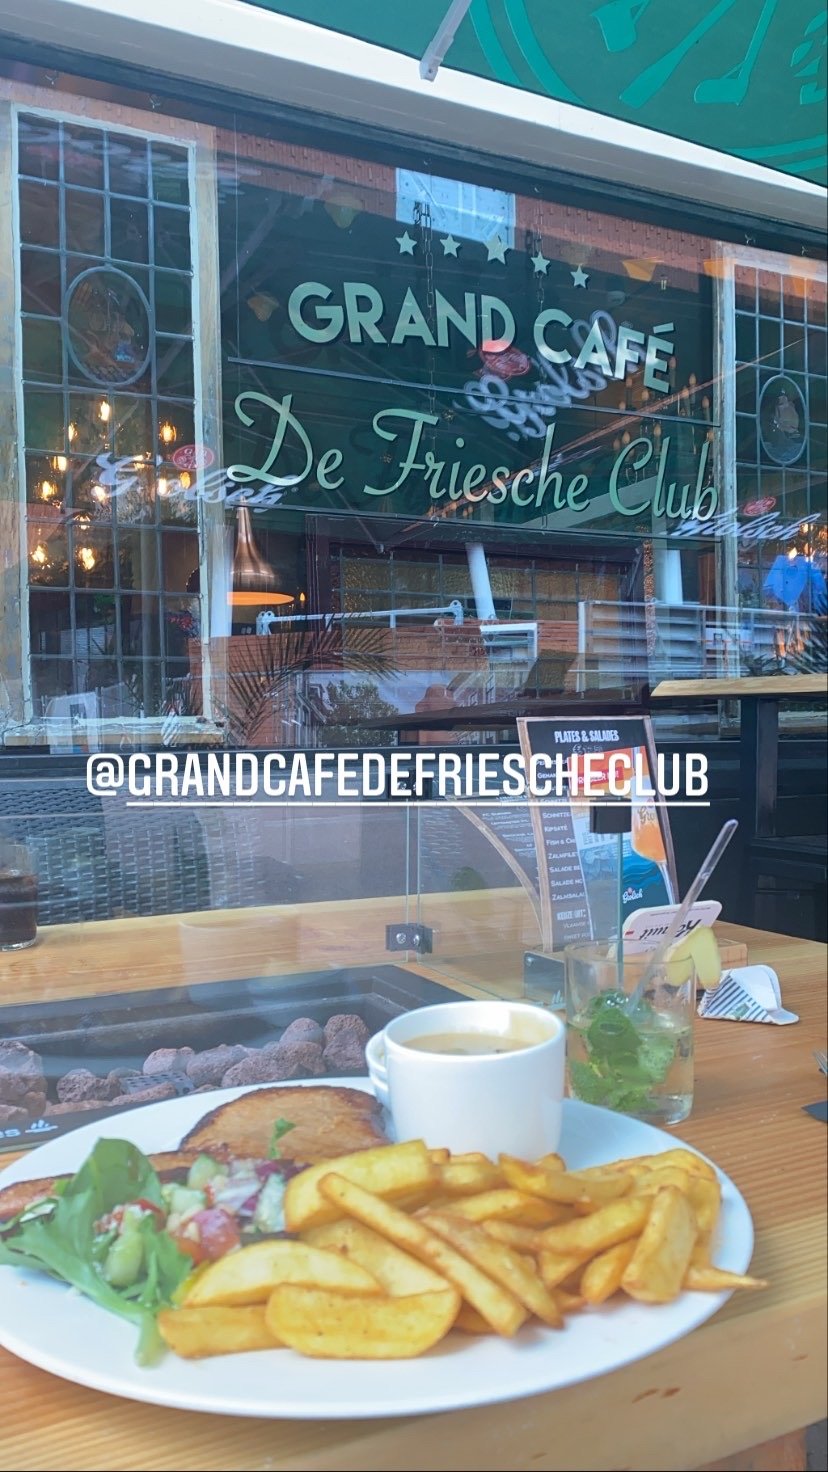 Grand Café De Friesche Club